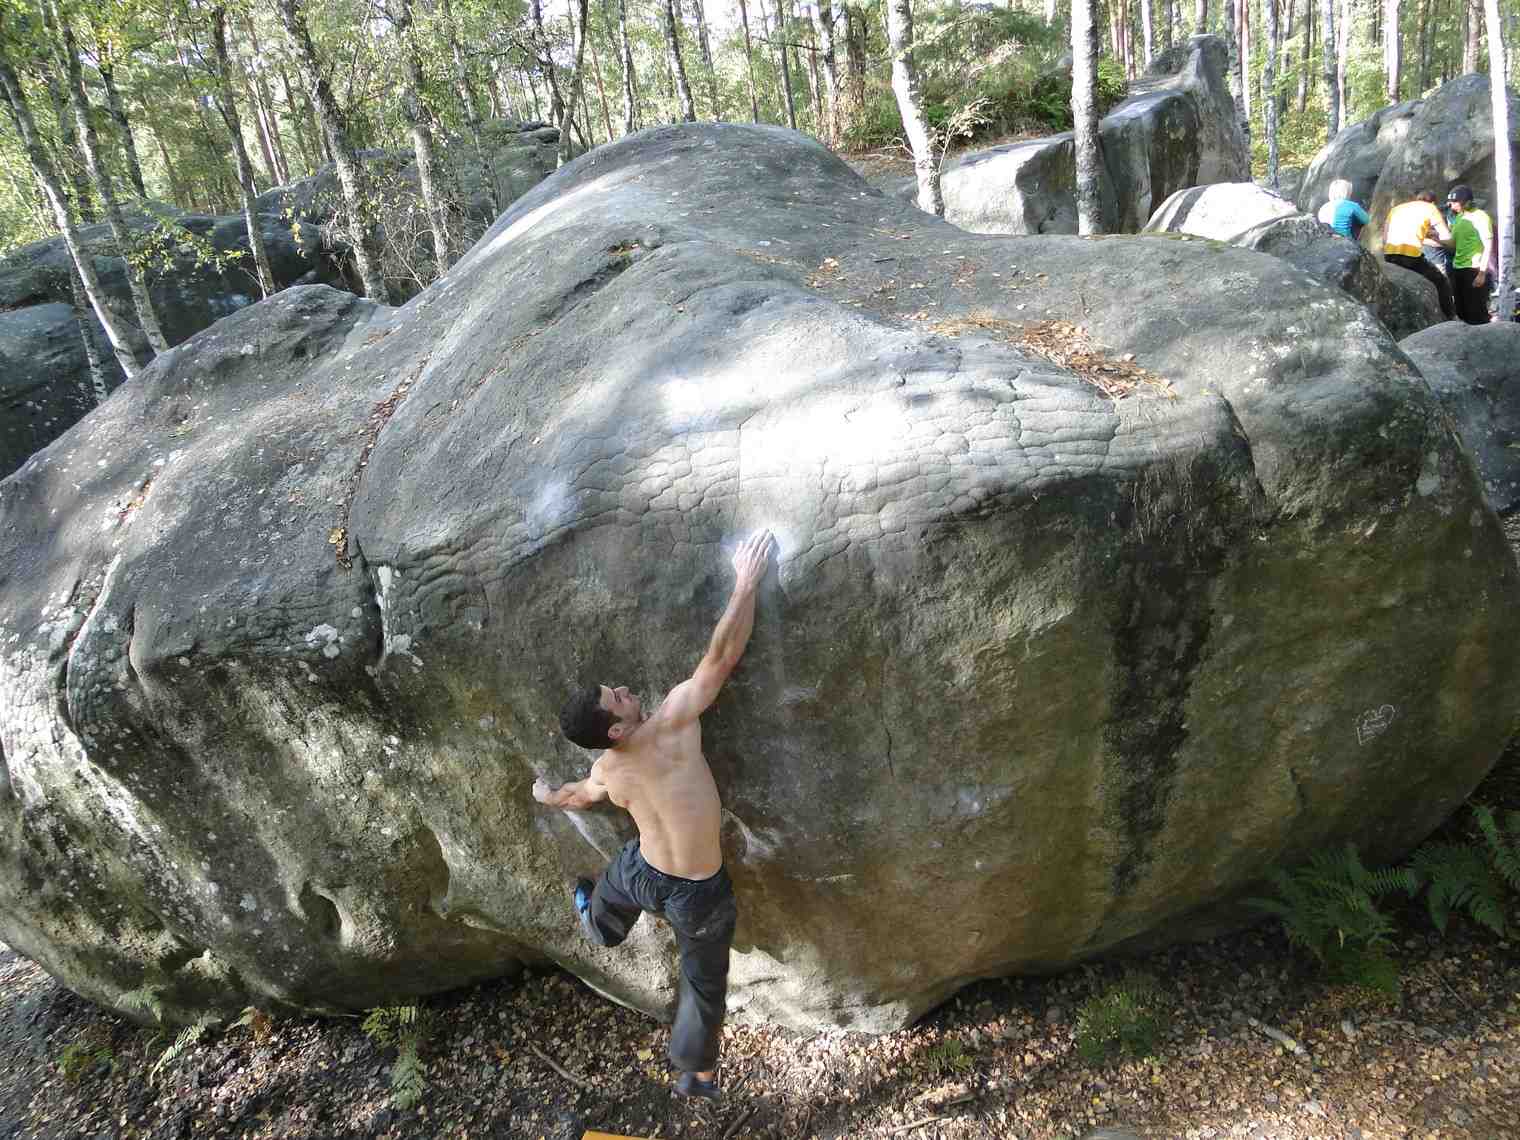 Franchard Isatis (Centre): Fontainebleau bouldering spots